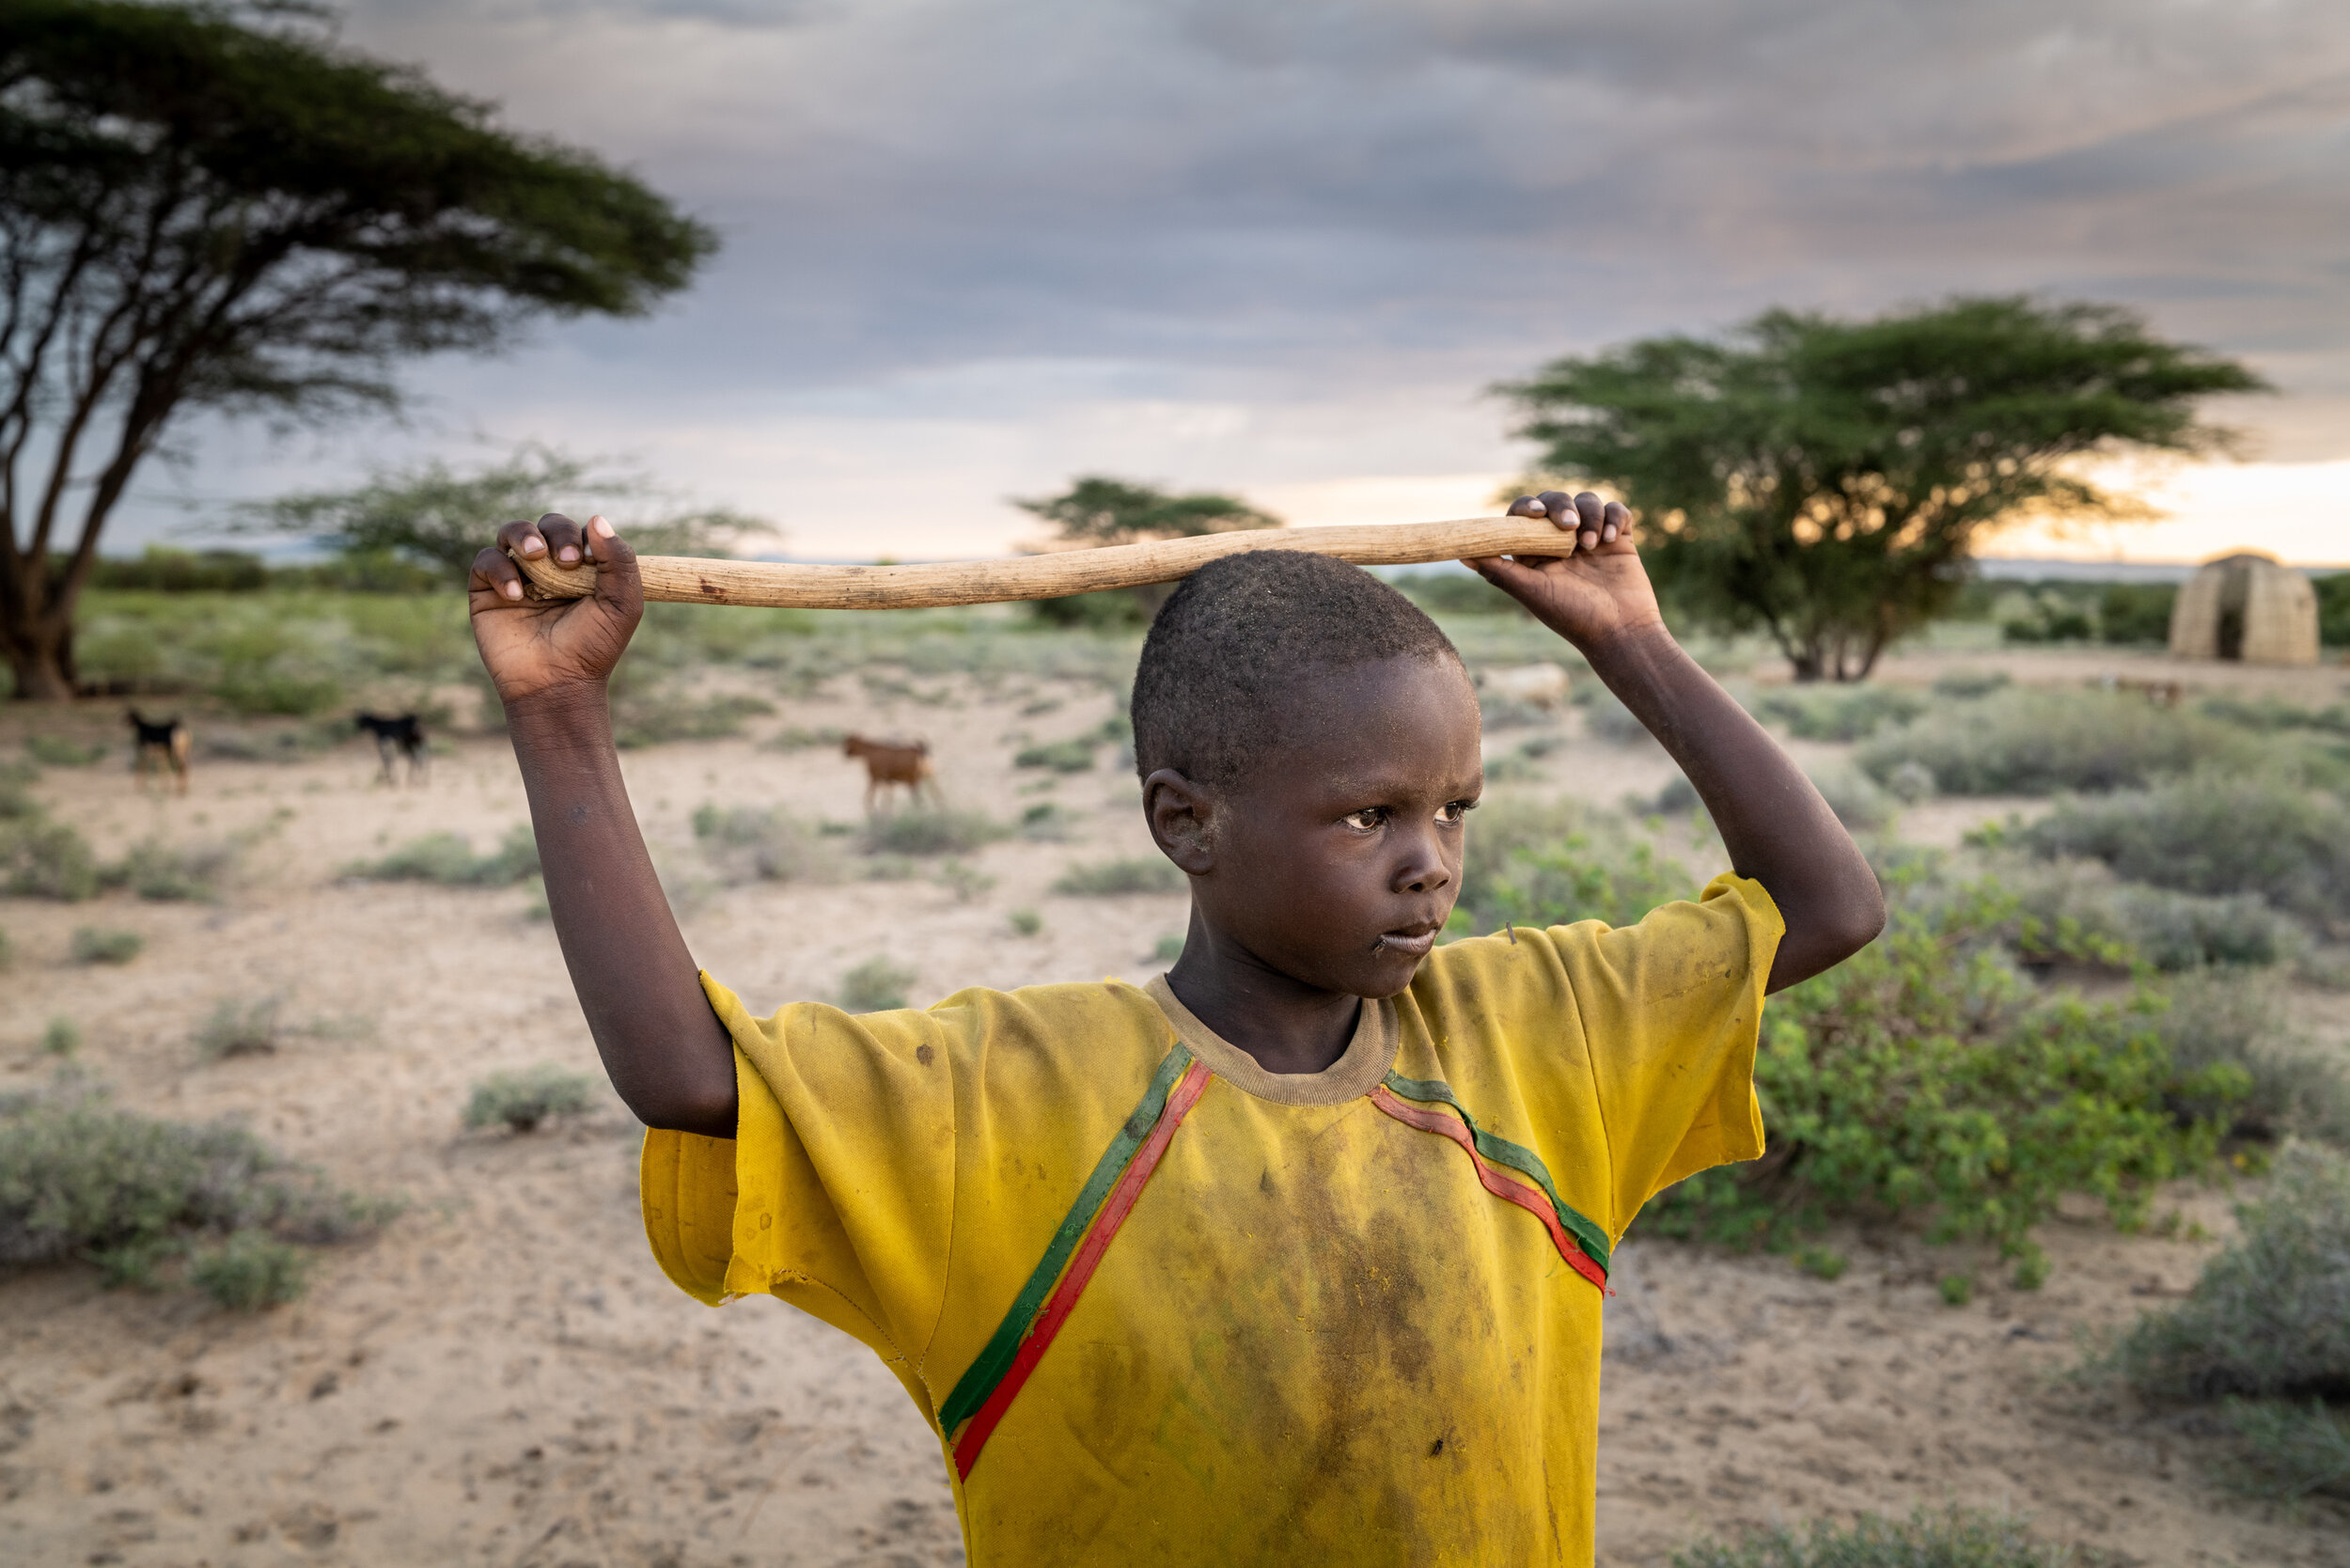 Eporon Ekai keeps a close eye on his family’s goats on the shore of Lake Turkana in Kenya